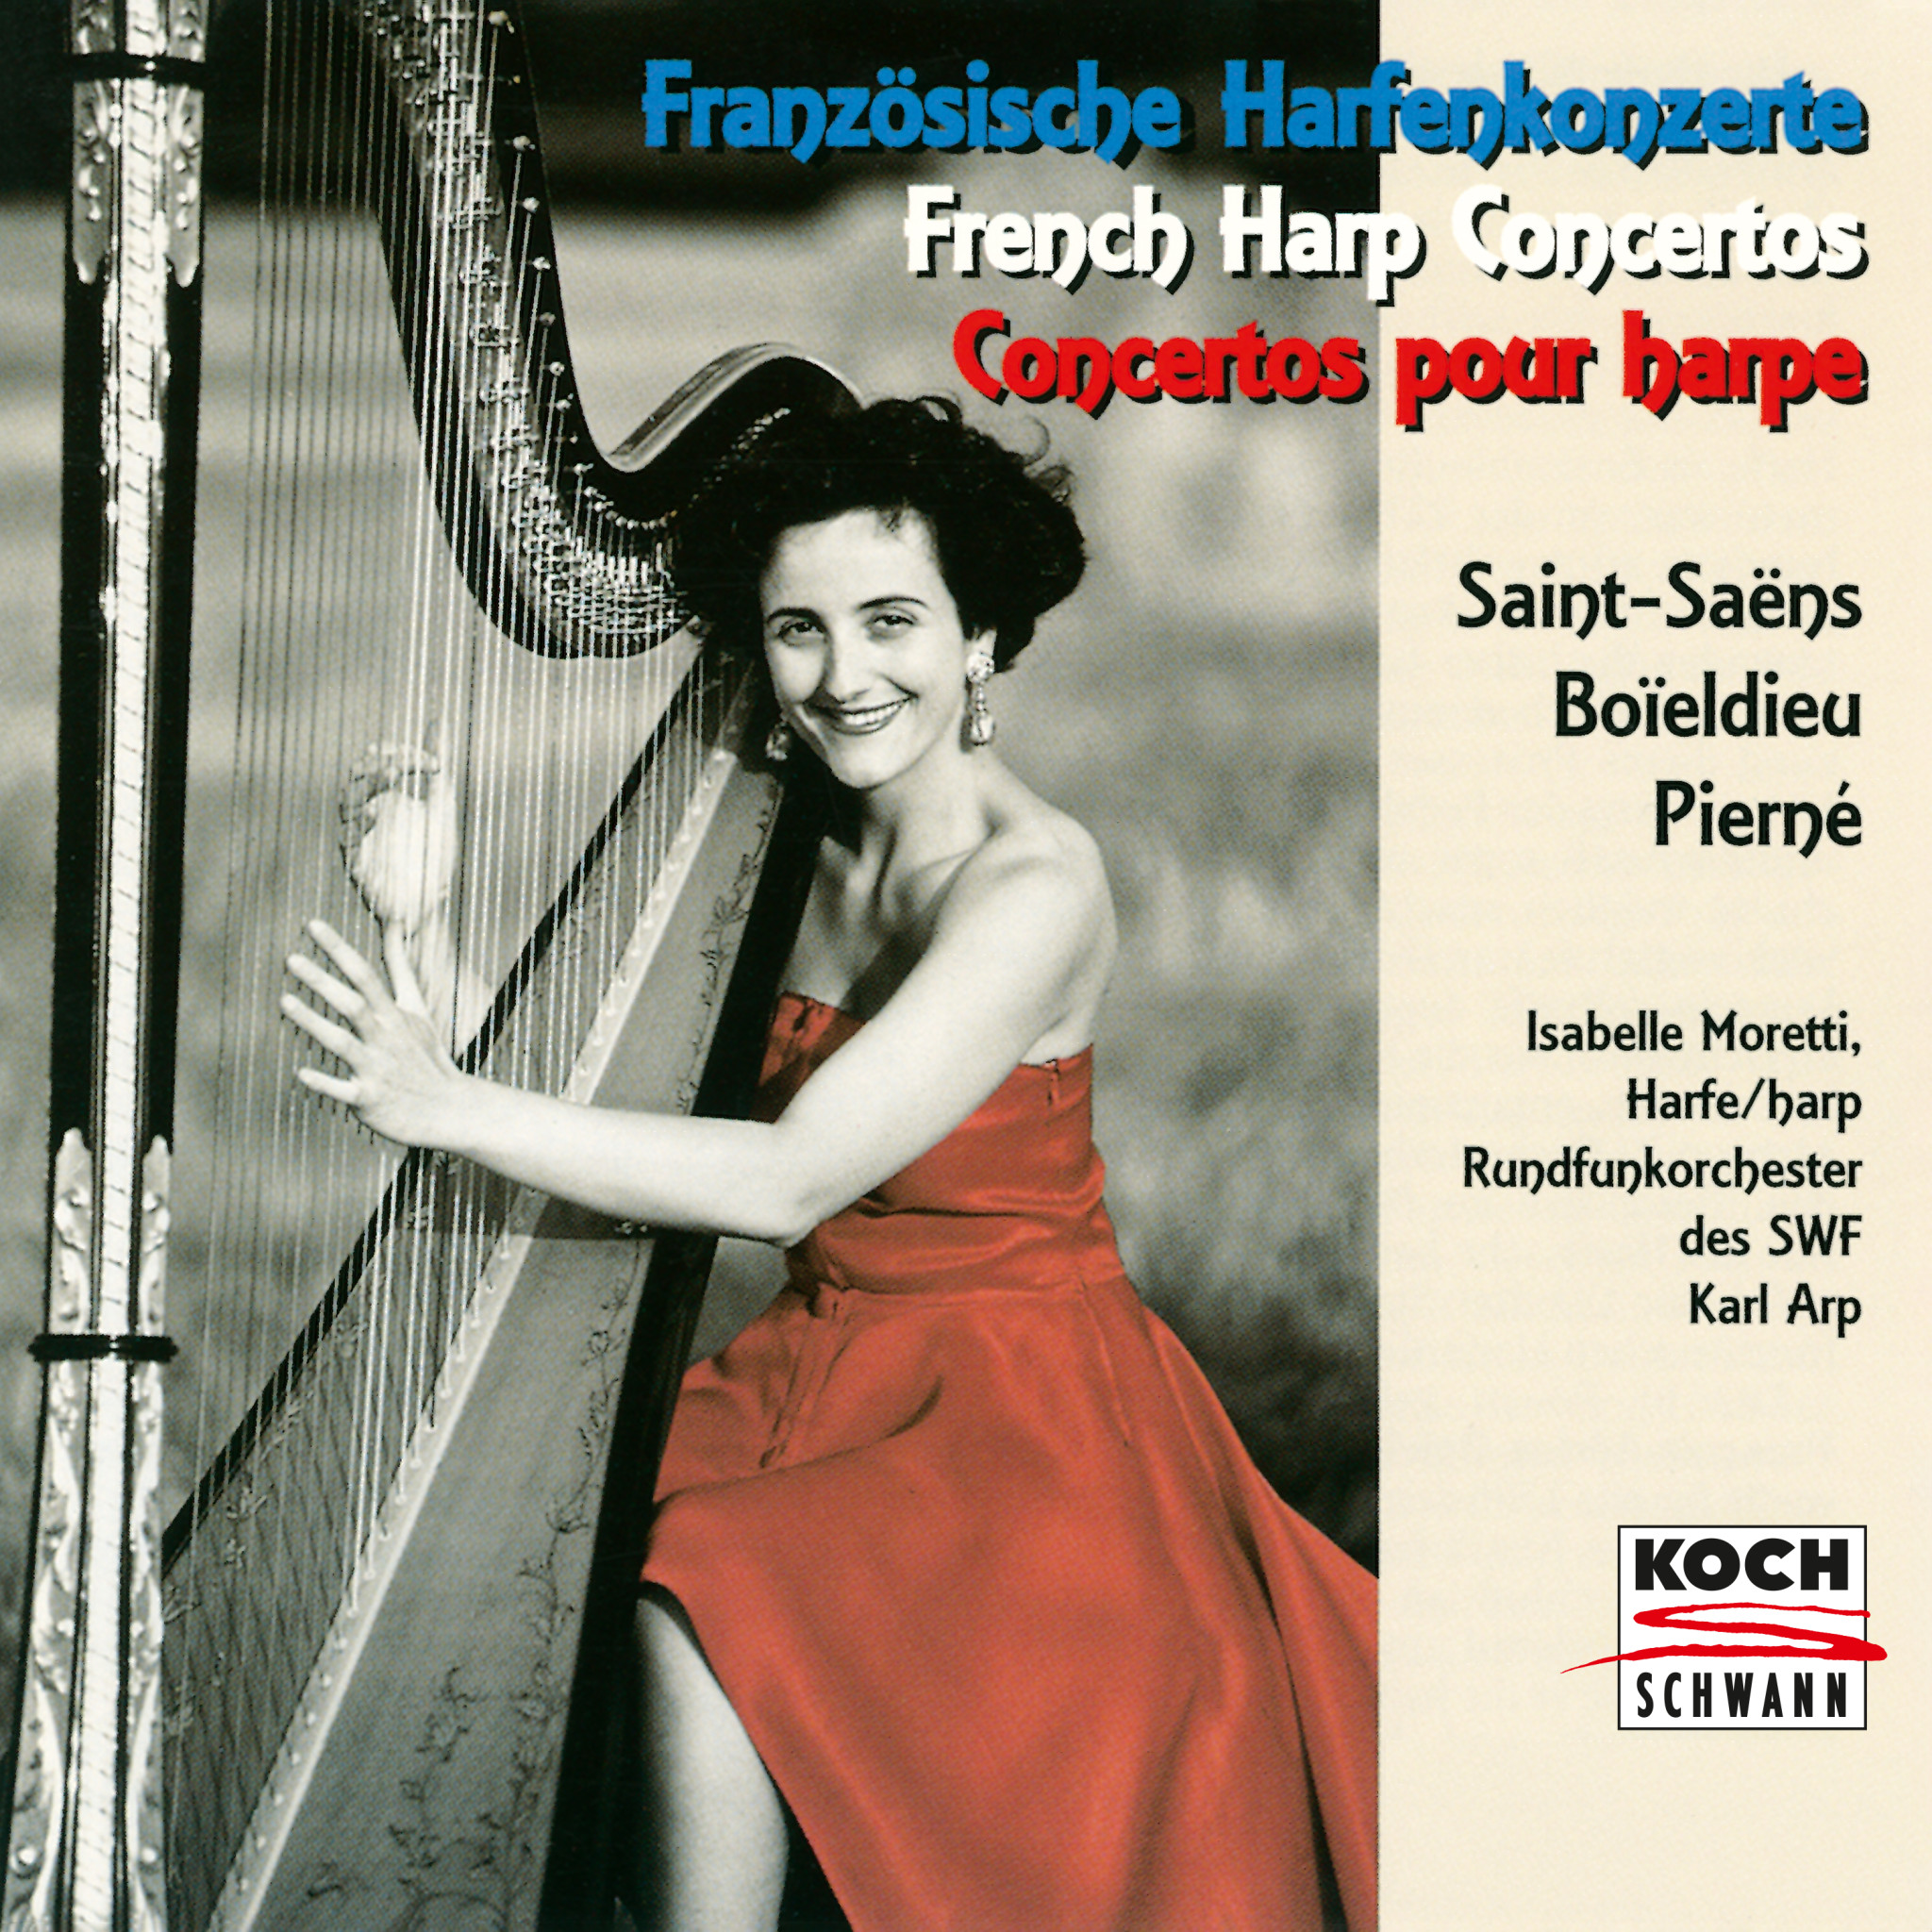 French Harp Concertos